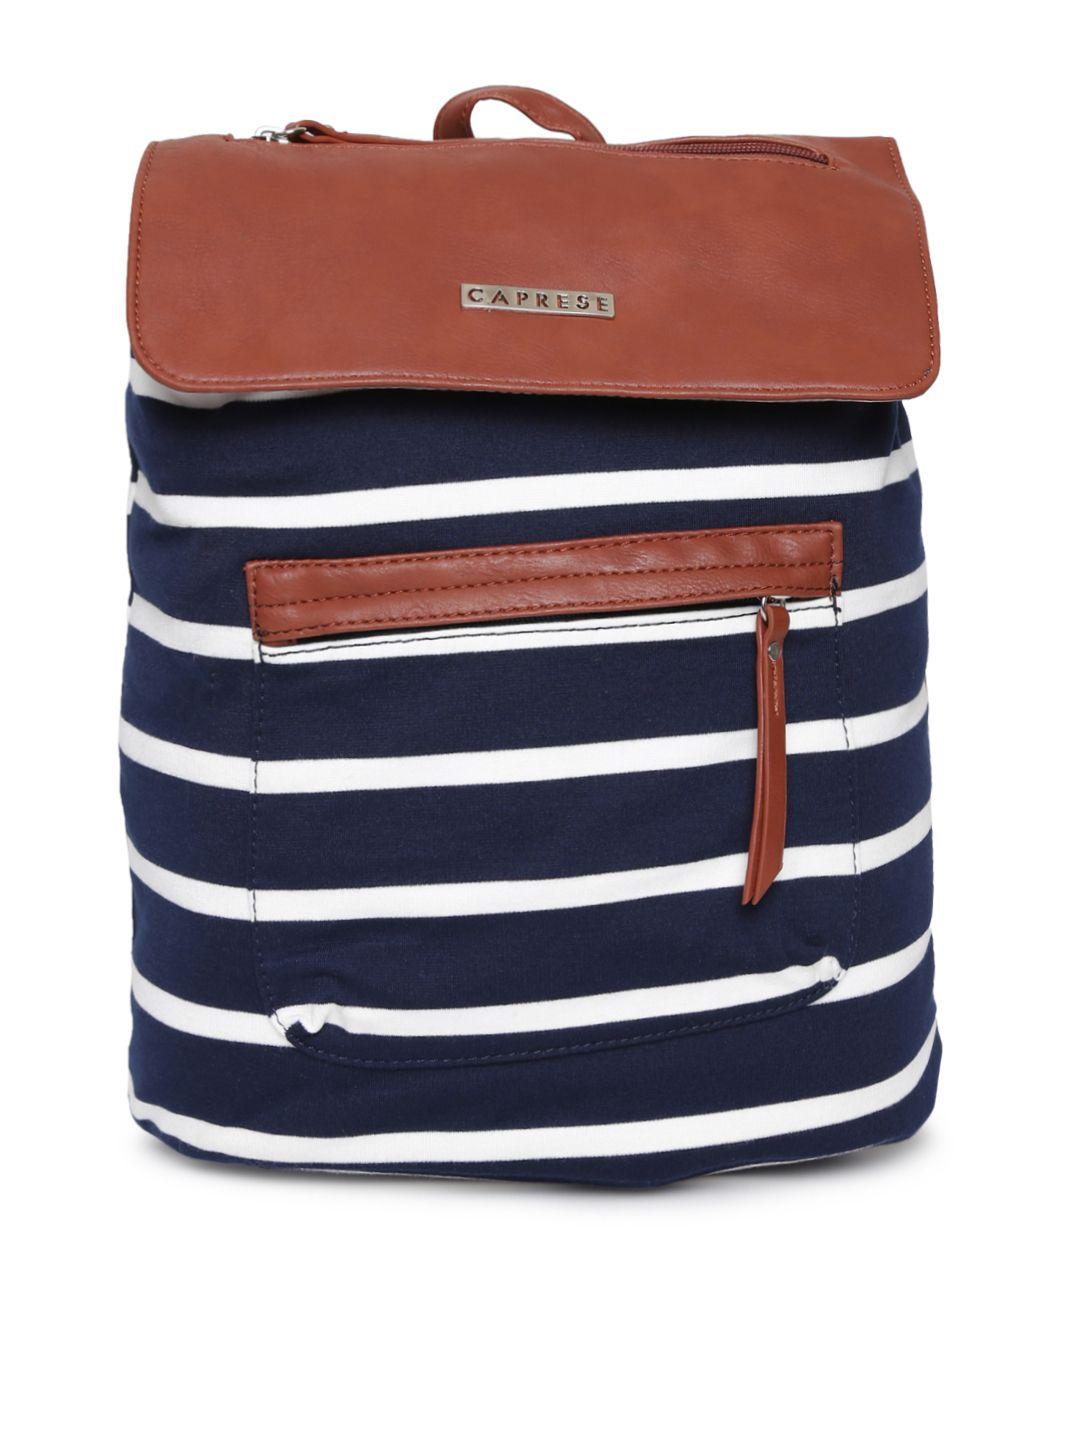 caprese women navy blue & brown striped backpack